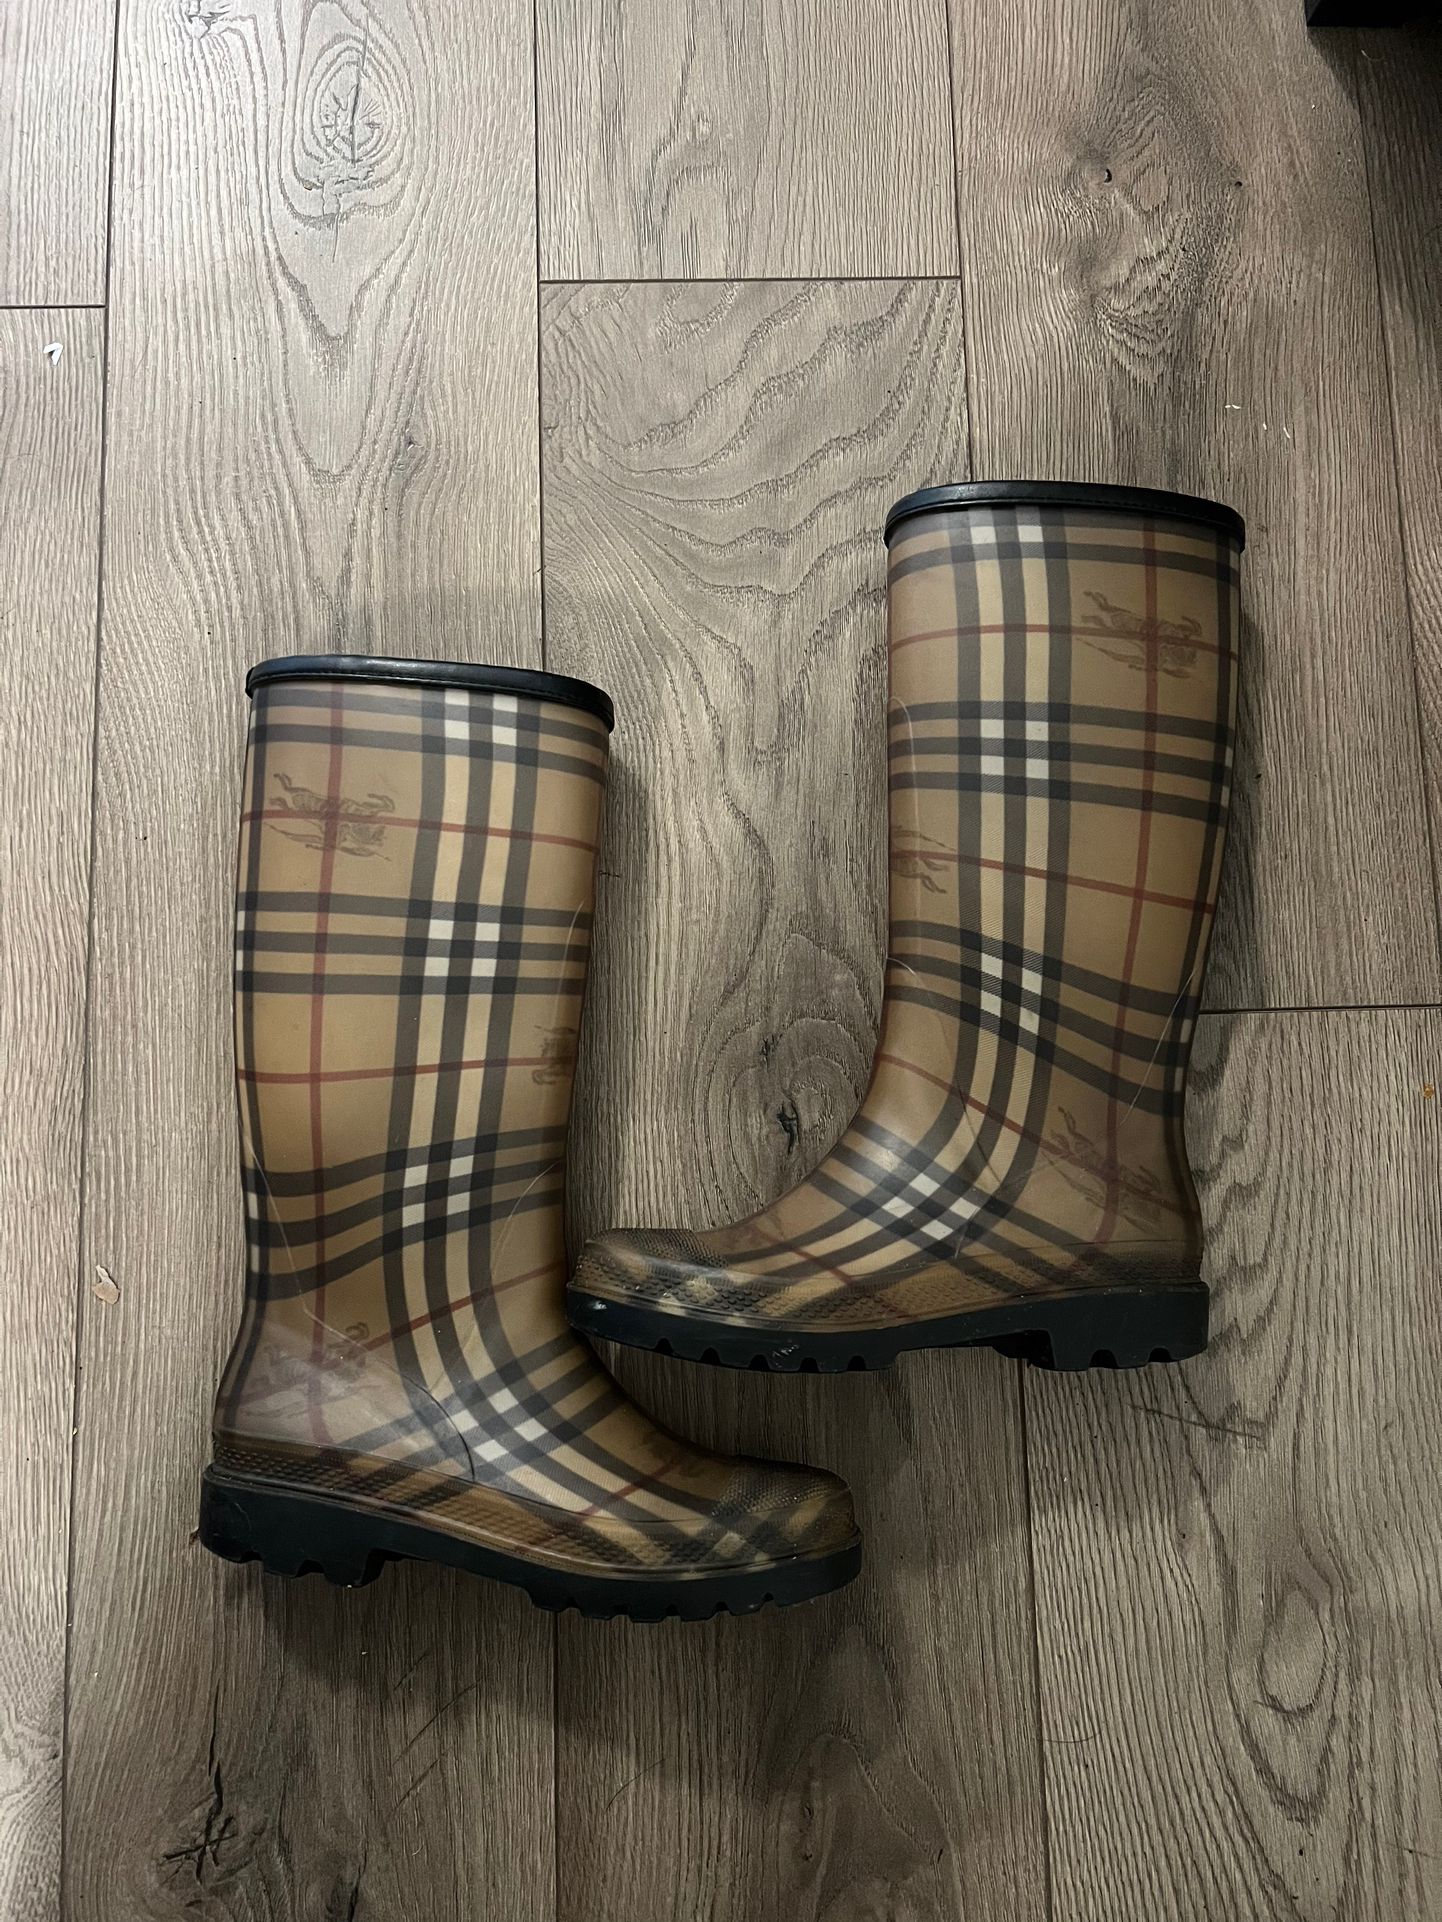 Burberry Rain Boots - Good Condition